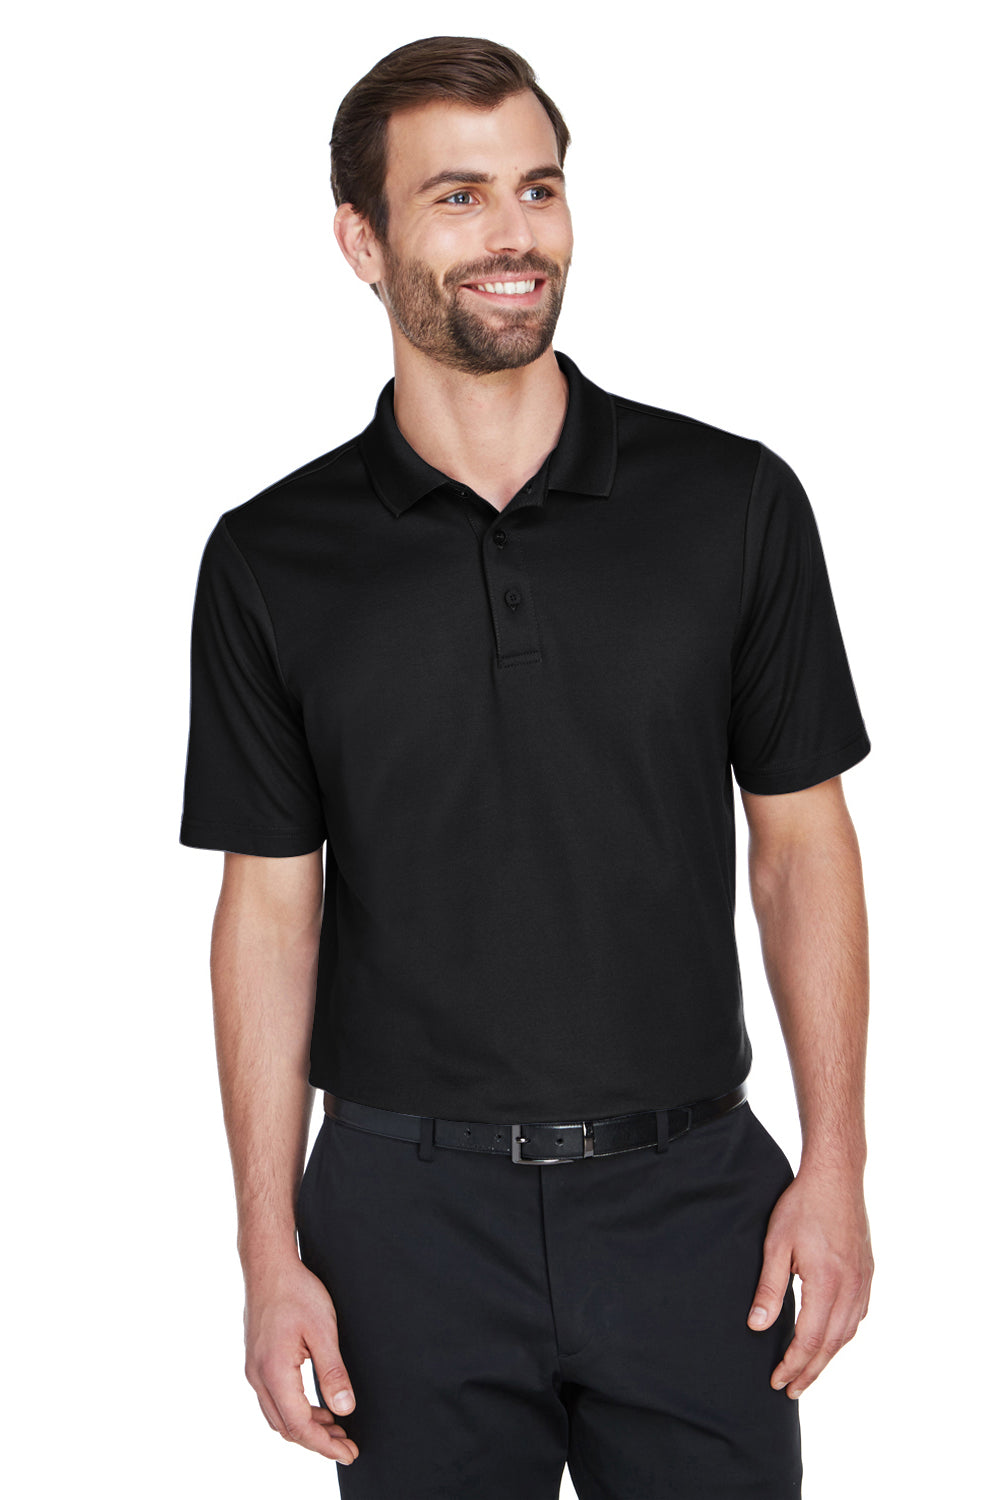 Devon & Jones Mens CrownLux Performance Moisture Wicking Short Sleeve Polo Shirt - Black